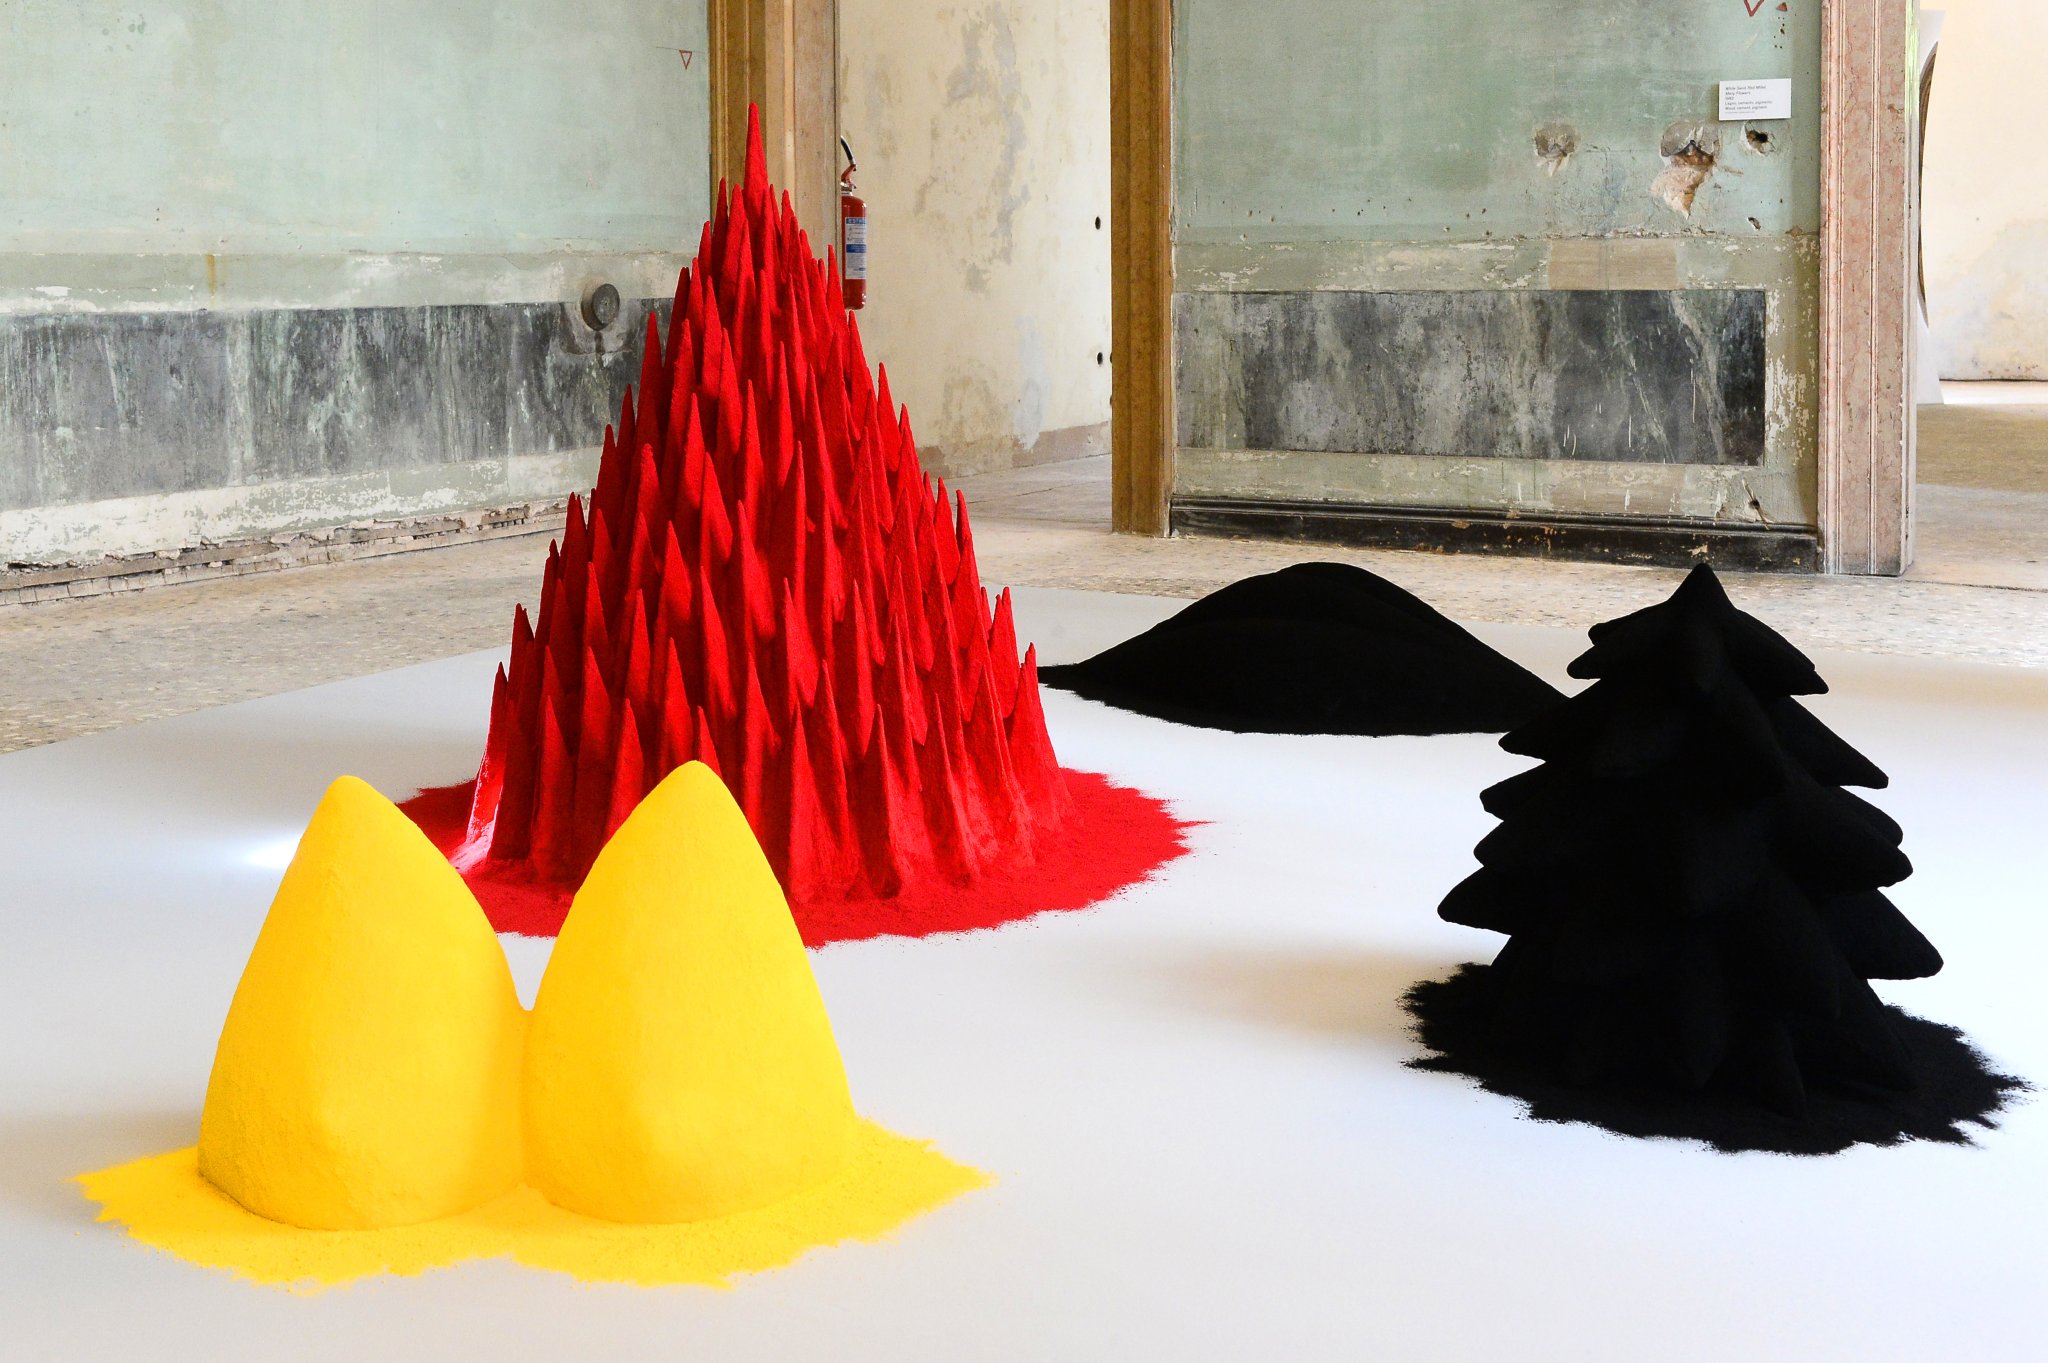 Anish Kapoor works using Vantablack on display in Venice, Italy.